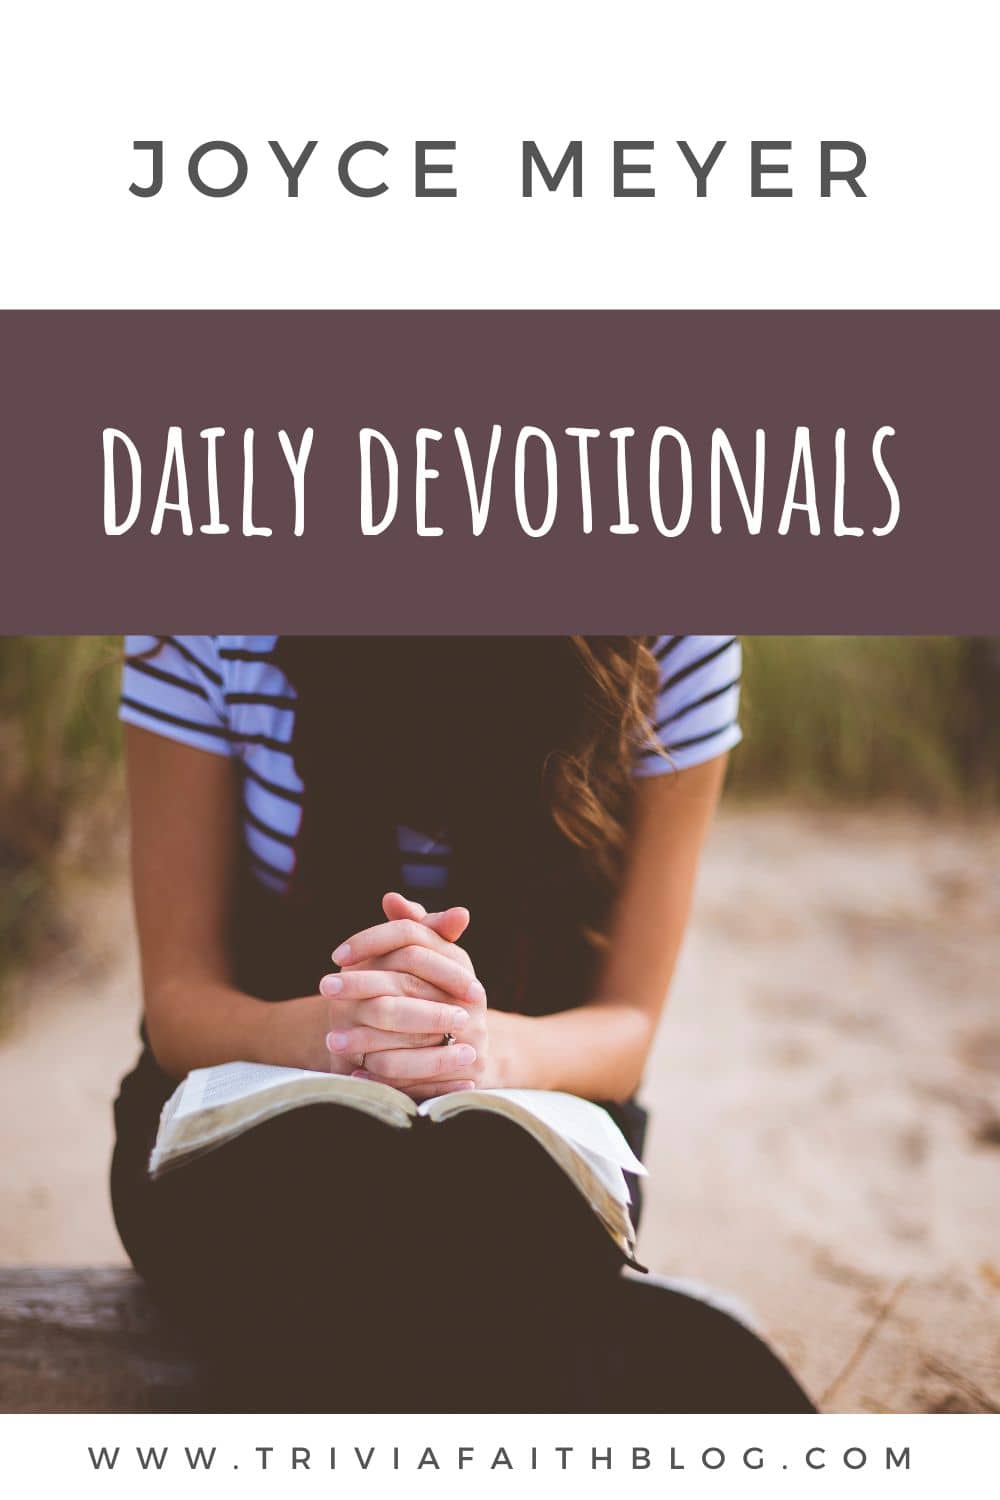 Joyce Meyer daily devotionals